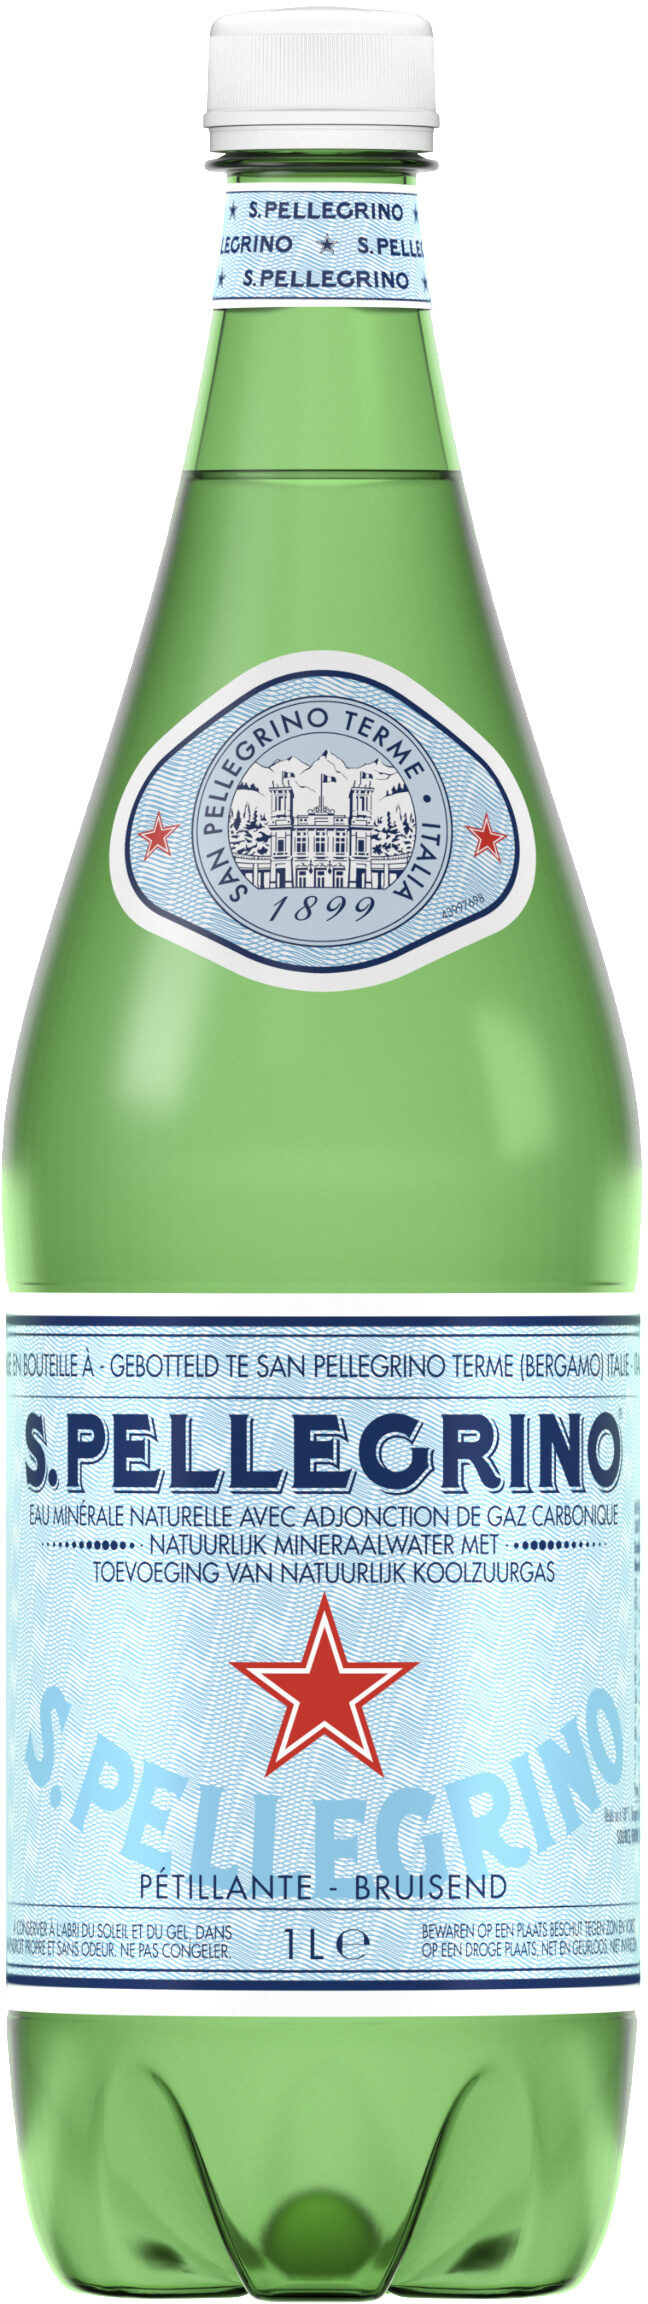 S. Pellegrino Water - Producte - en